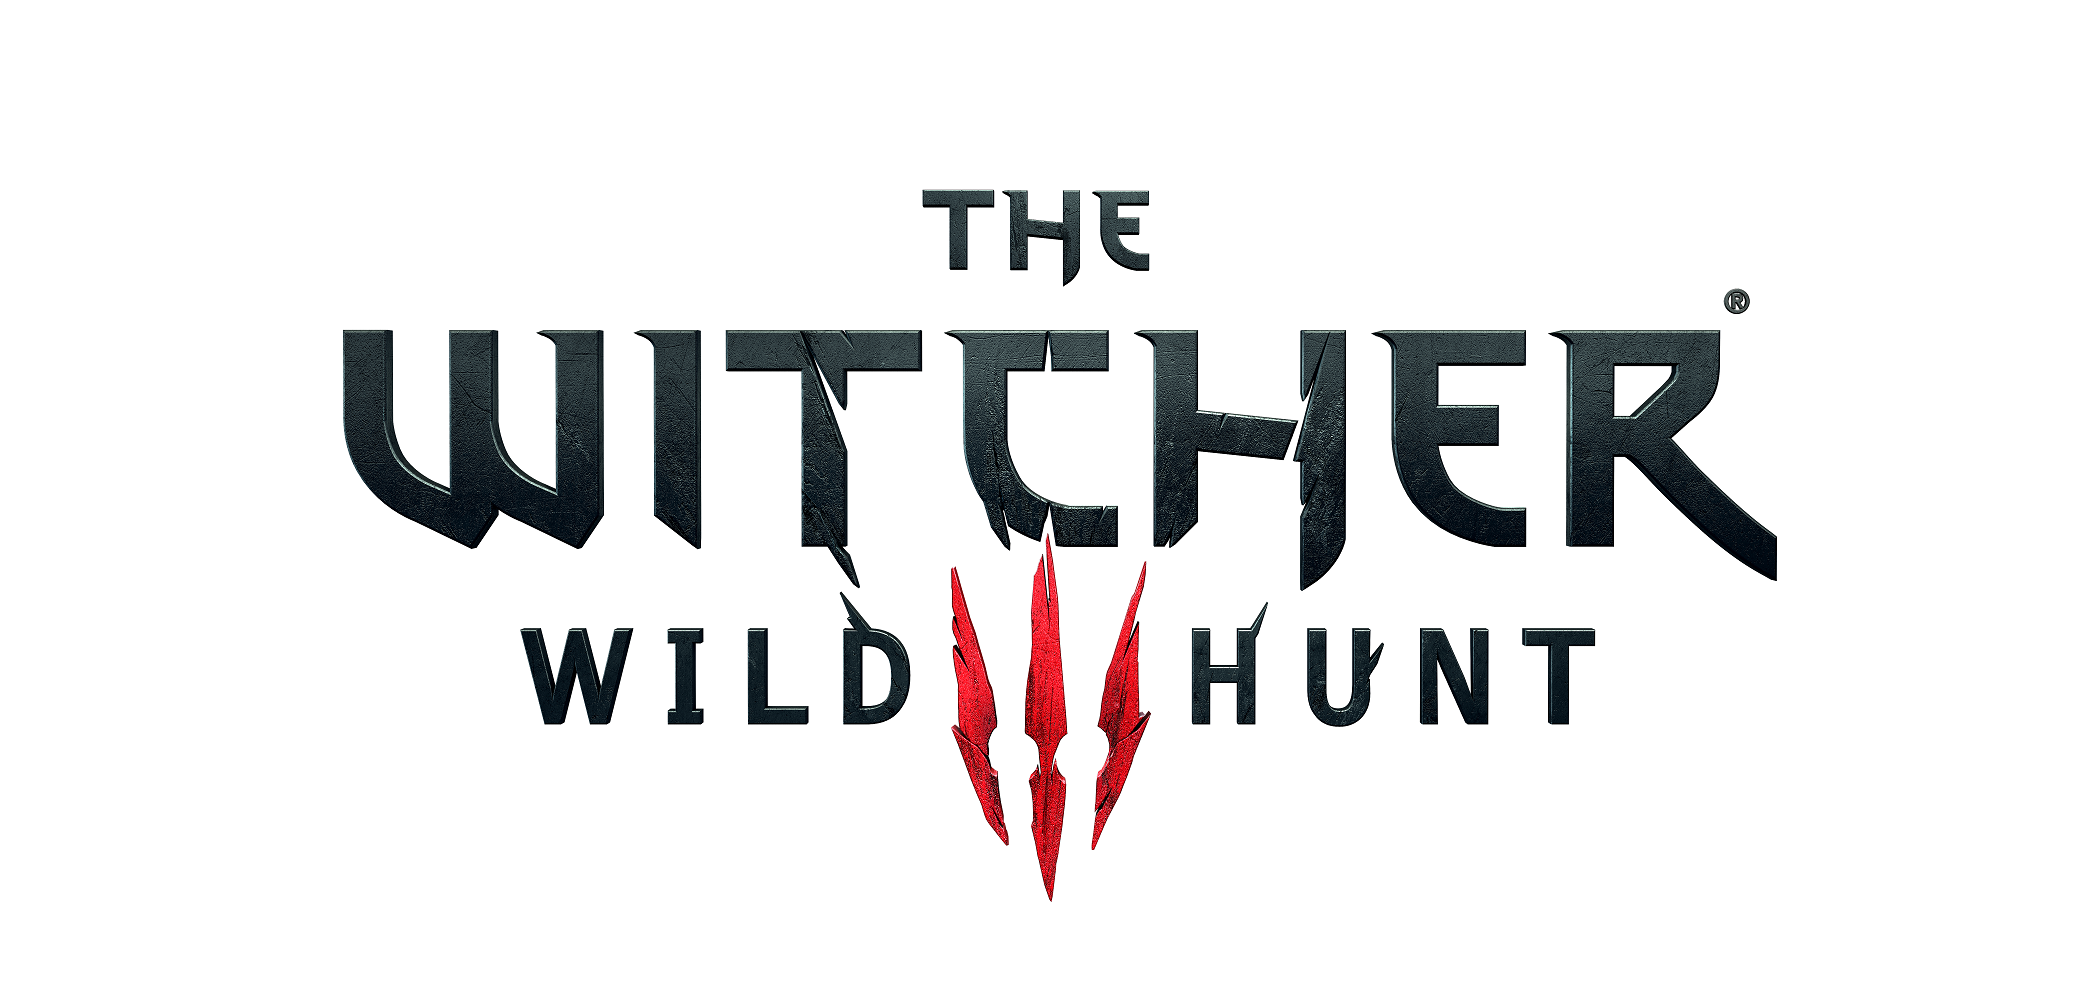 The Witcher 3: Wild Hunt, il video gameplay dalla Gamescom